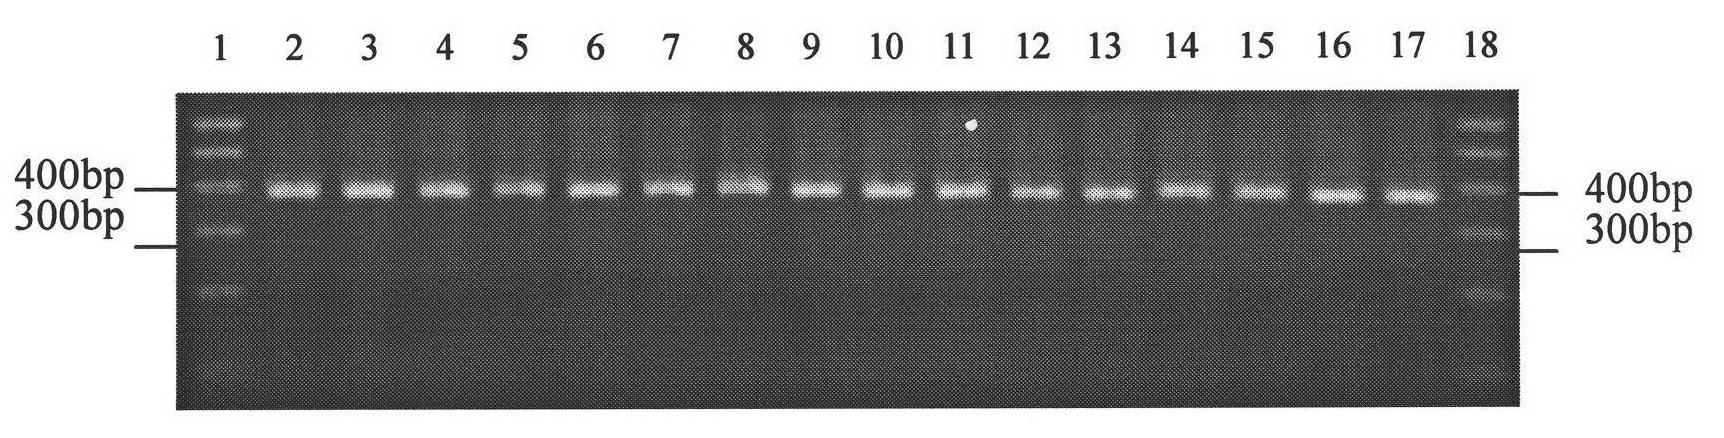 Method for detecting Marek's disease resistance homozygous genotype chicken